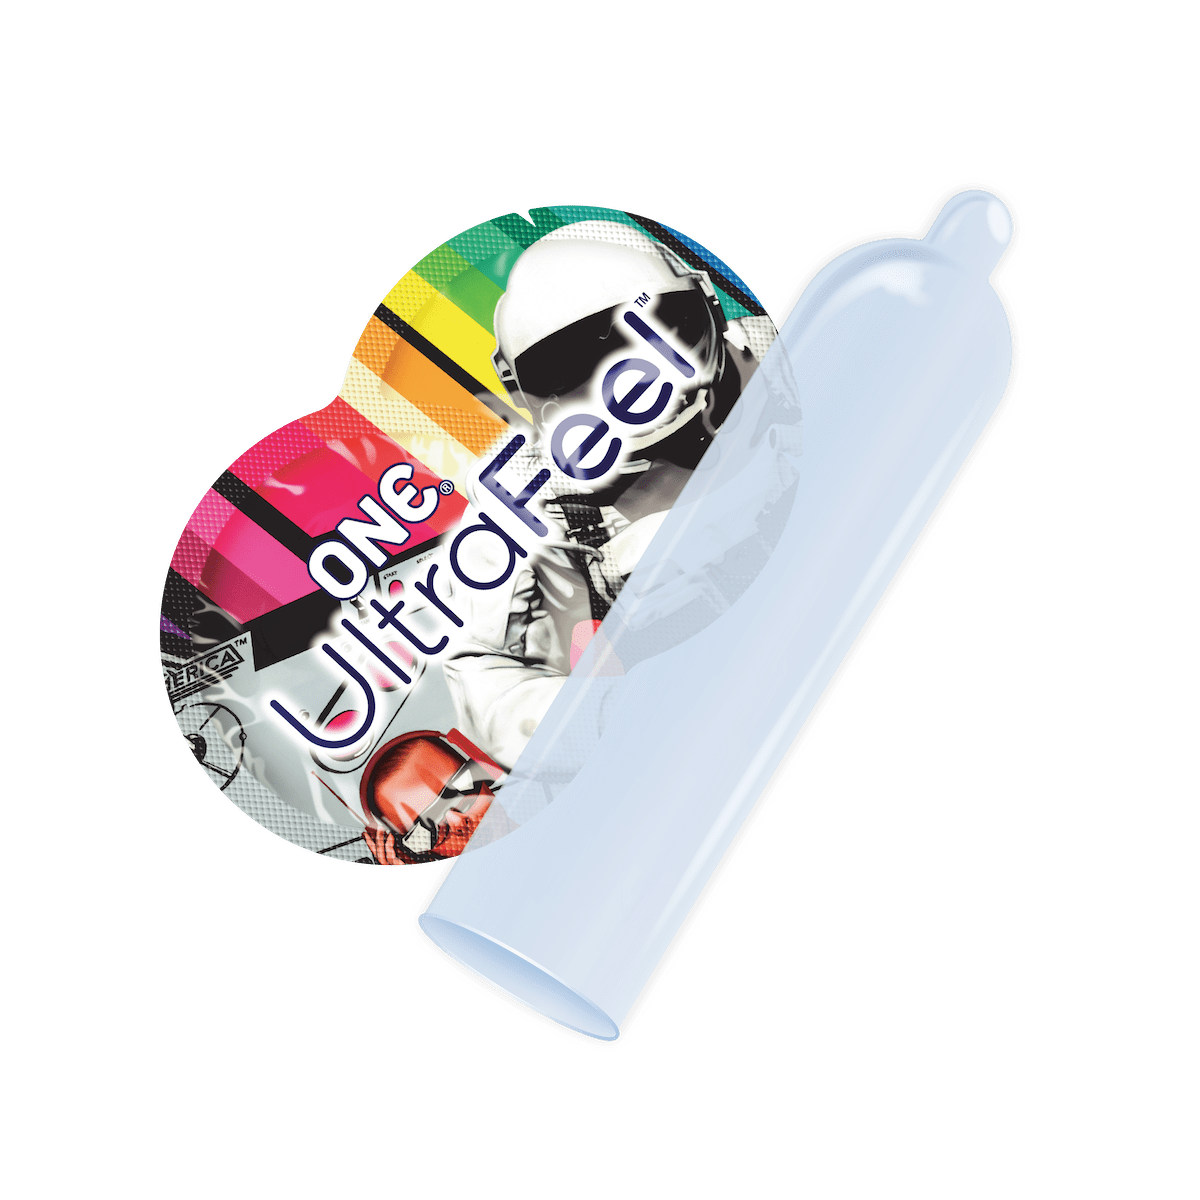 ONE UltraFeel 2-in-1 Condoms - Bulk Each